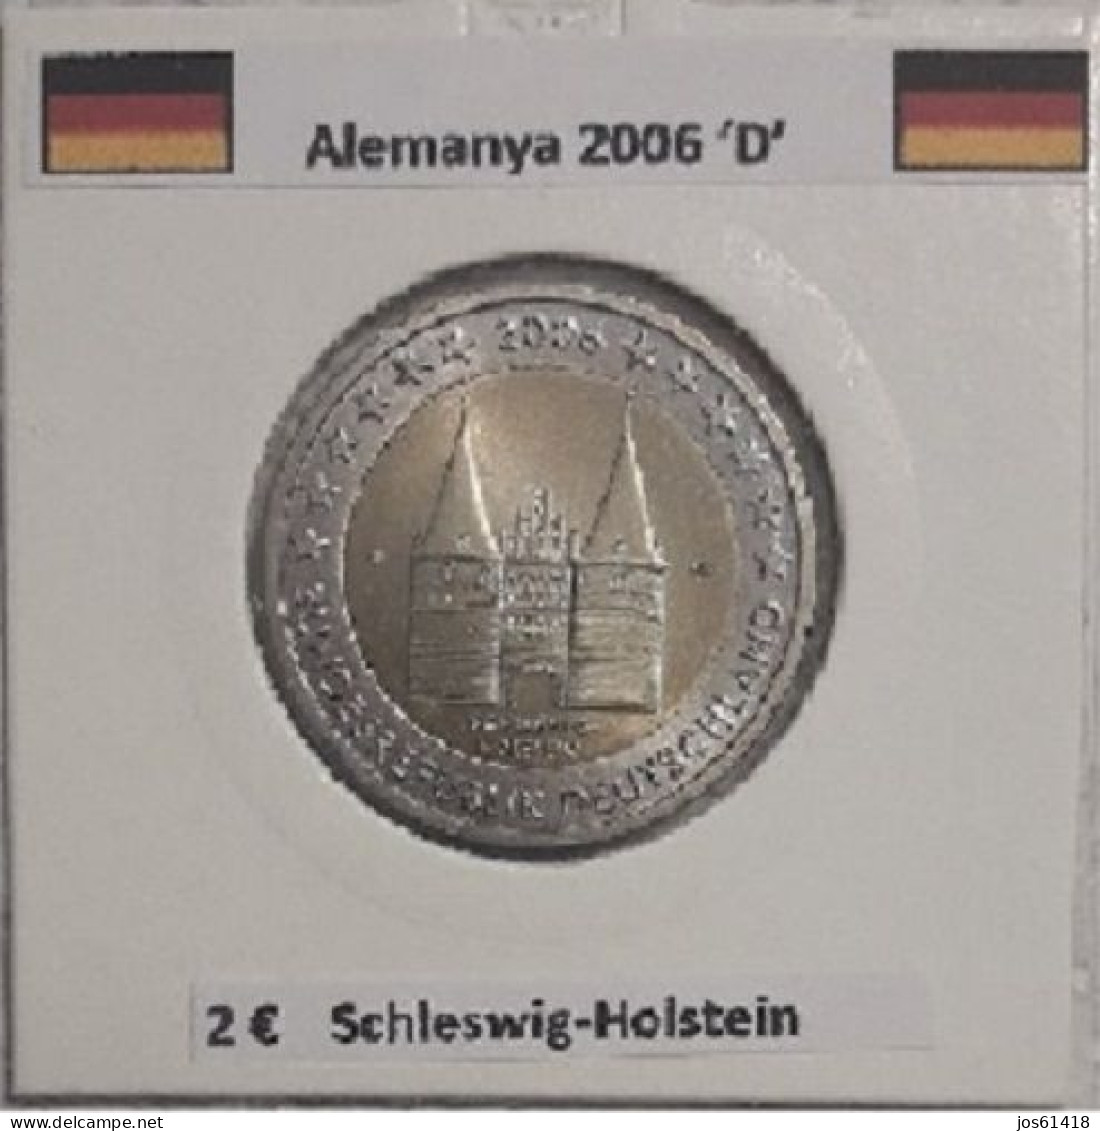 2 Euros Alemania / Germany 2006  Schleswig-Holstein  D Sin Circular - Germany